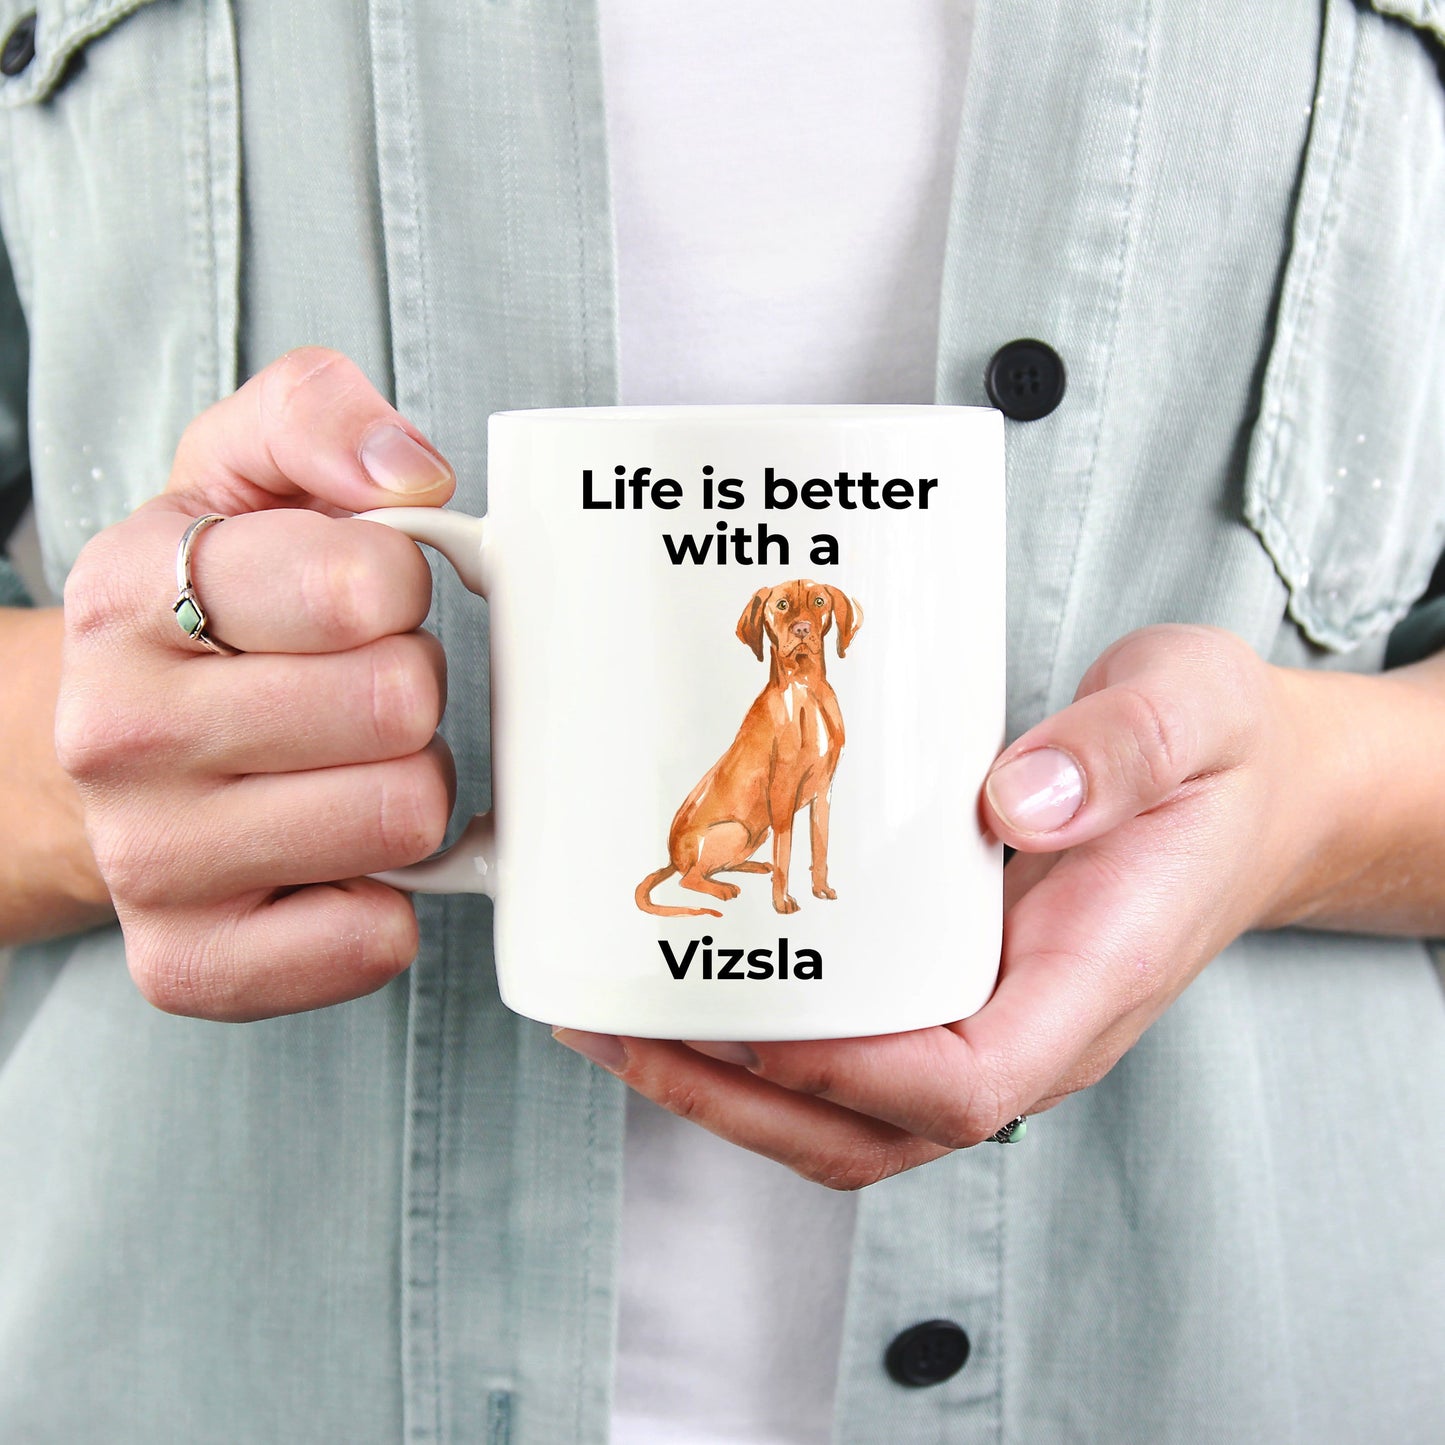 Vizsla Coffee Mug - Life is Better